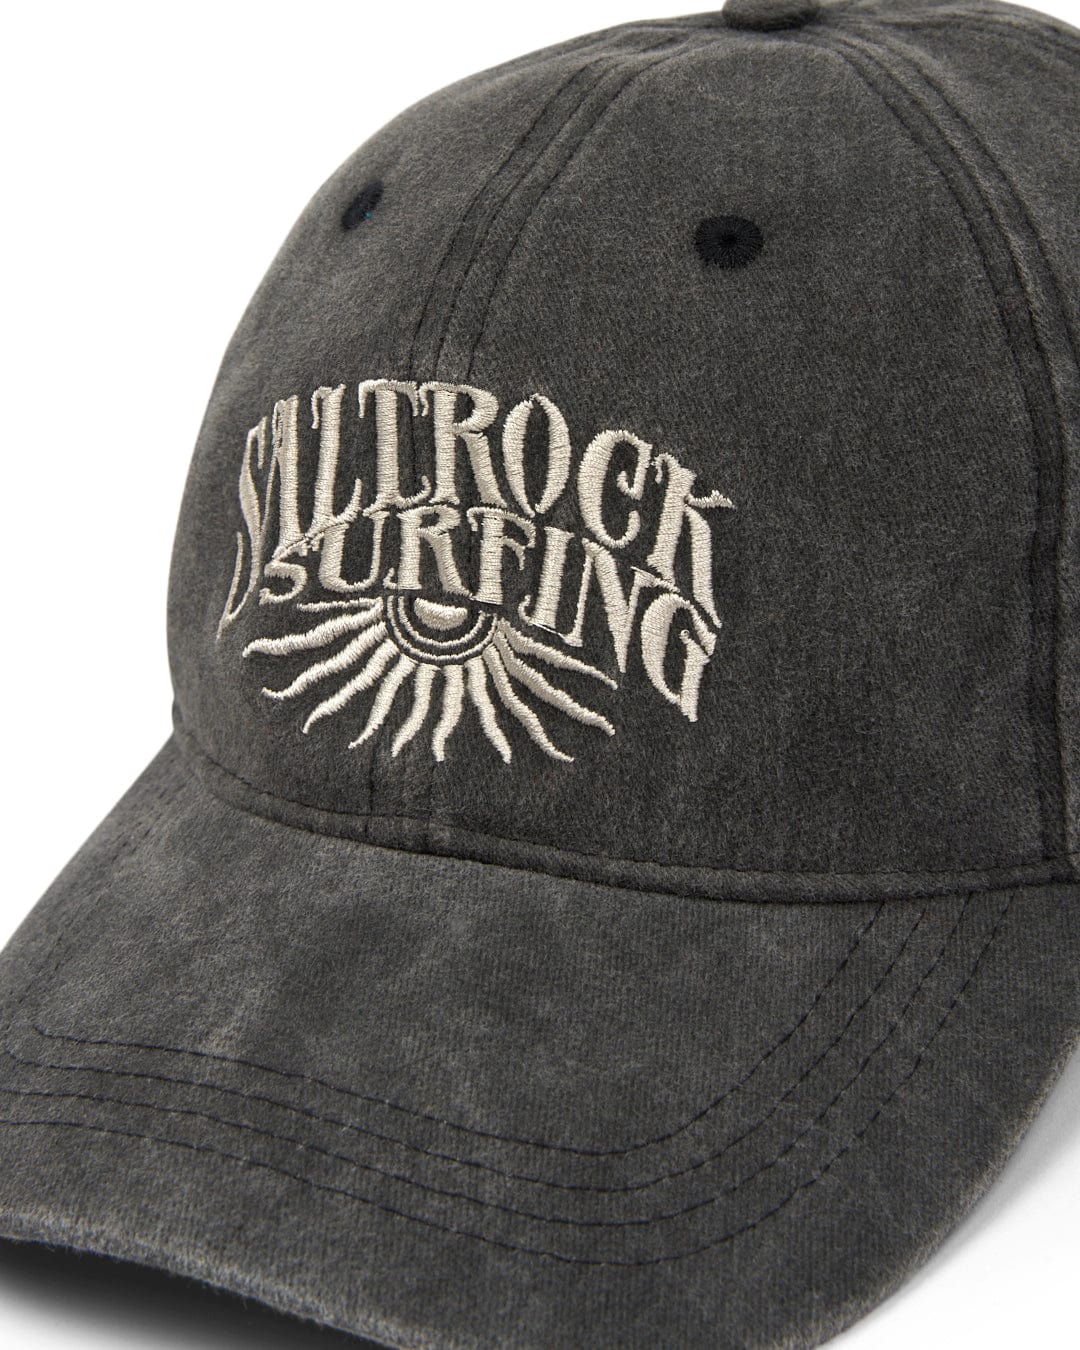 Dark Grey Sunburst Cap with Saltrock logo embroidered branding.